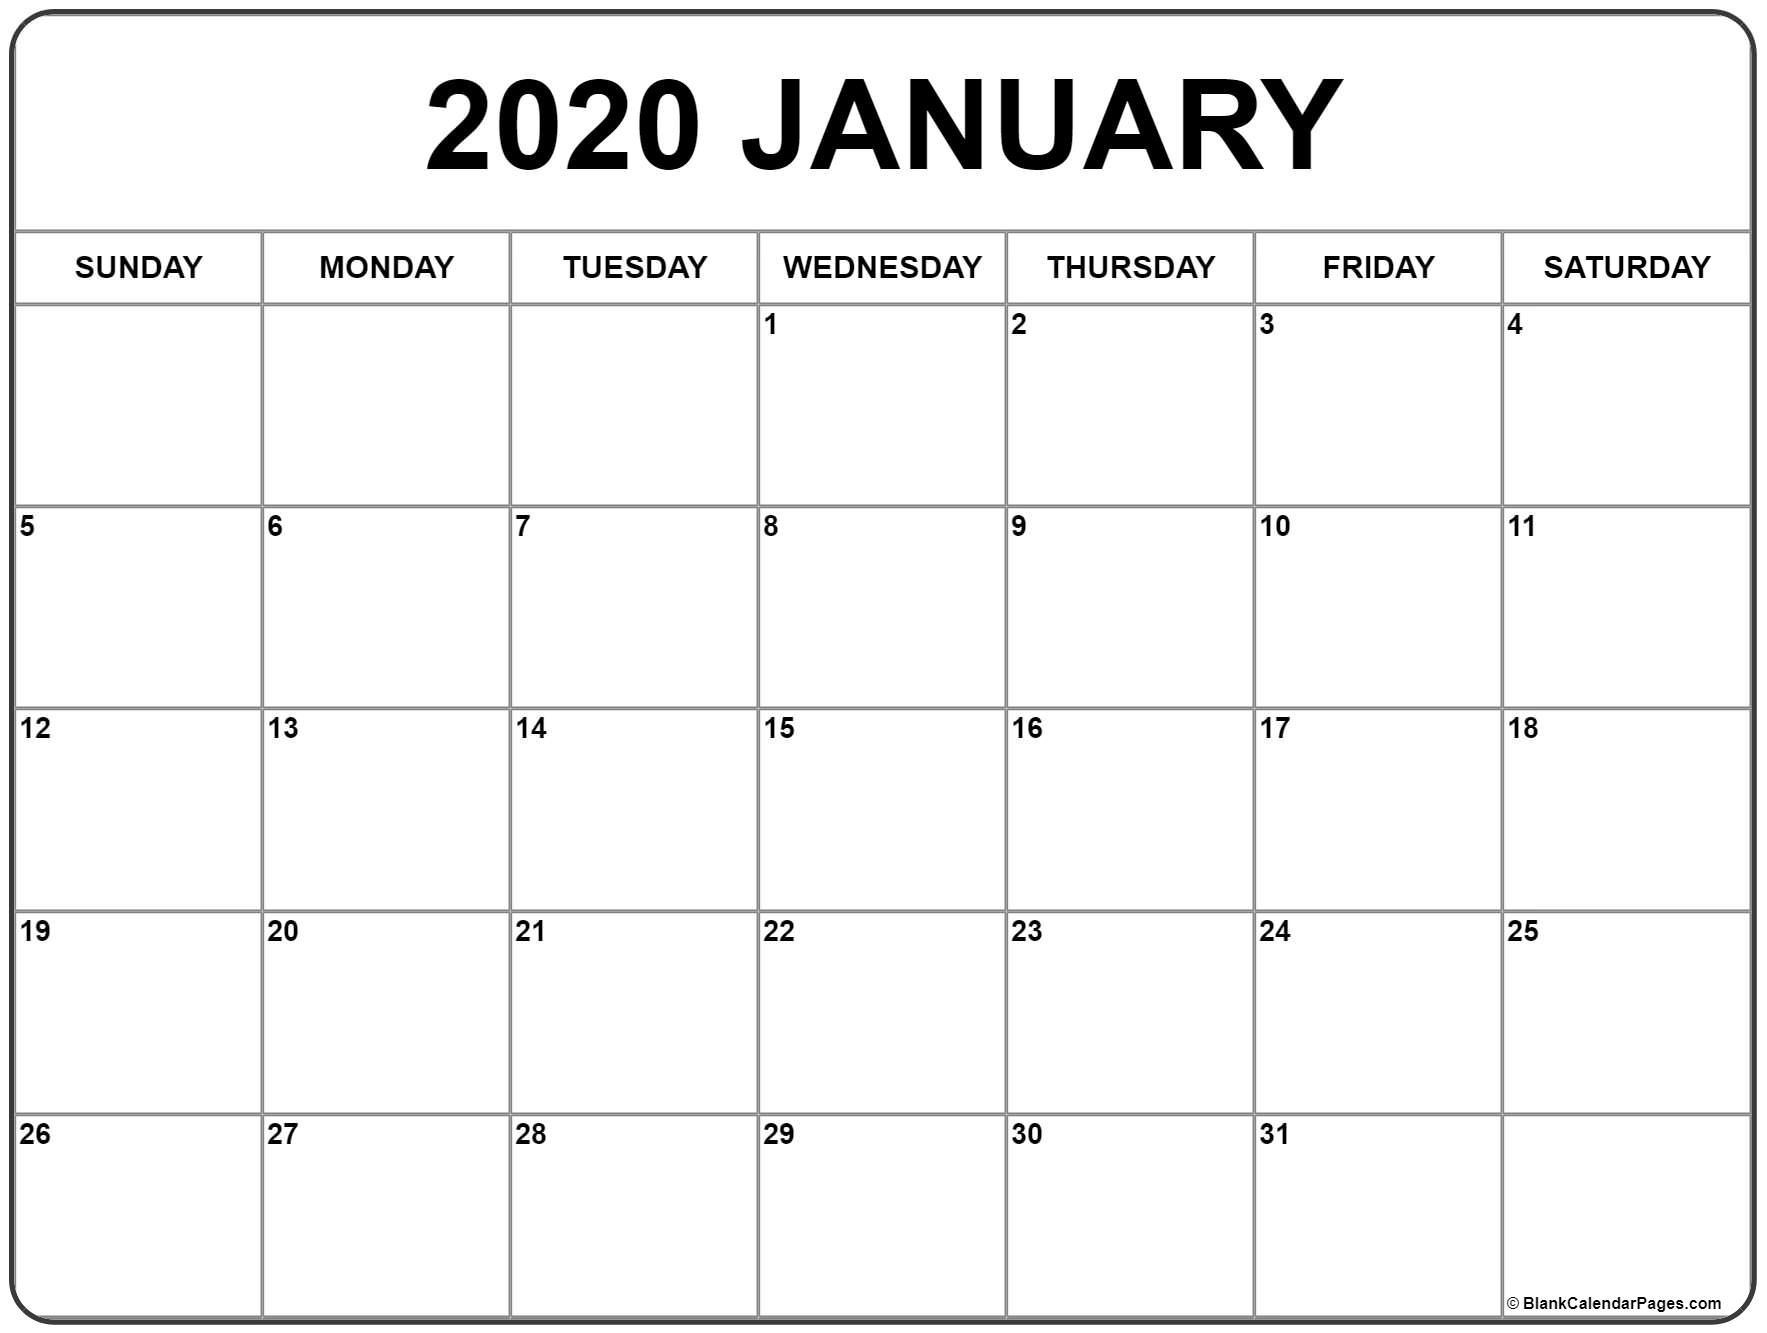 January 2020 Calendar | Free Printable Monthly Calendars-Aug Monthly Calendar 2020